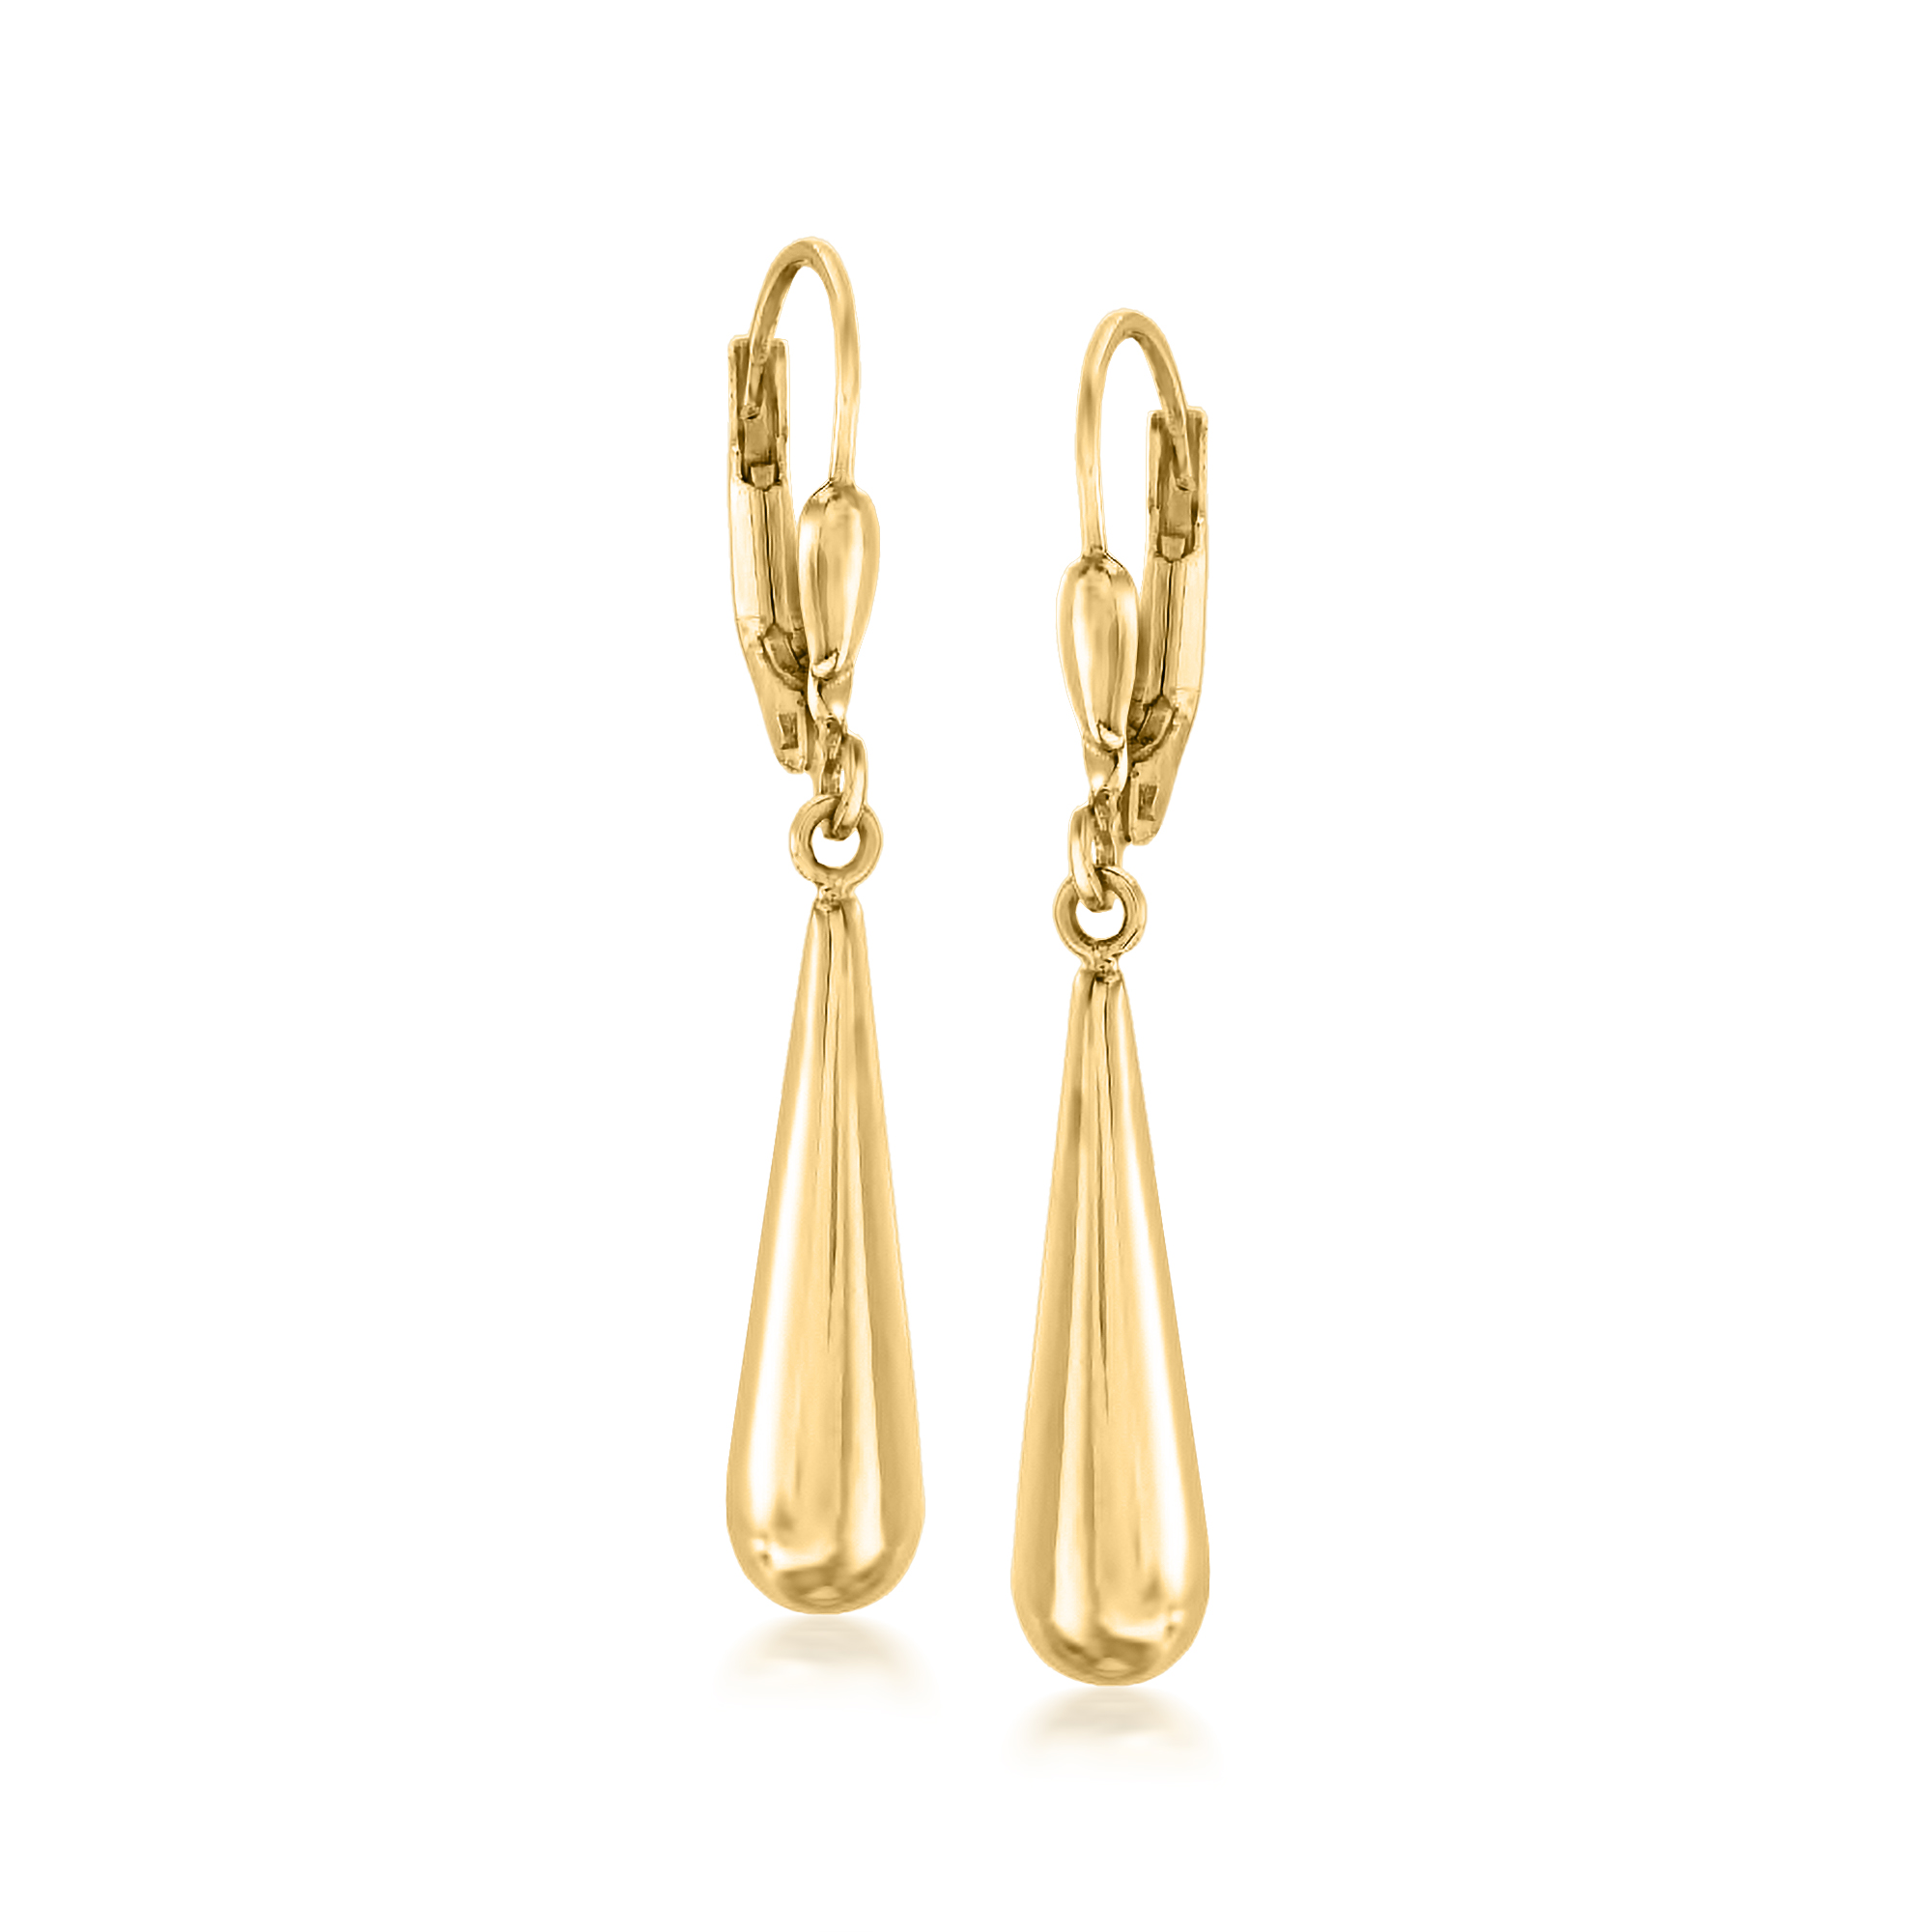 Grand Gold Ball Drop Earrings | Ben-Amun Jewelry